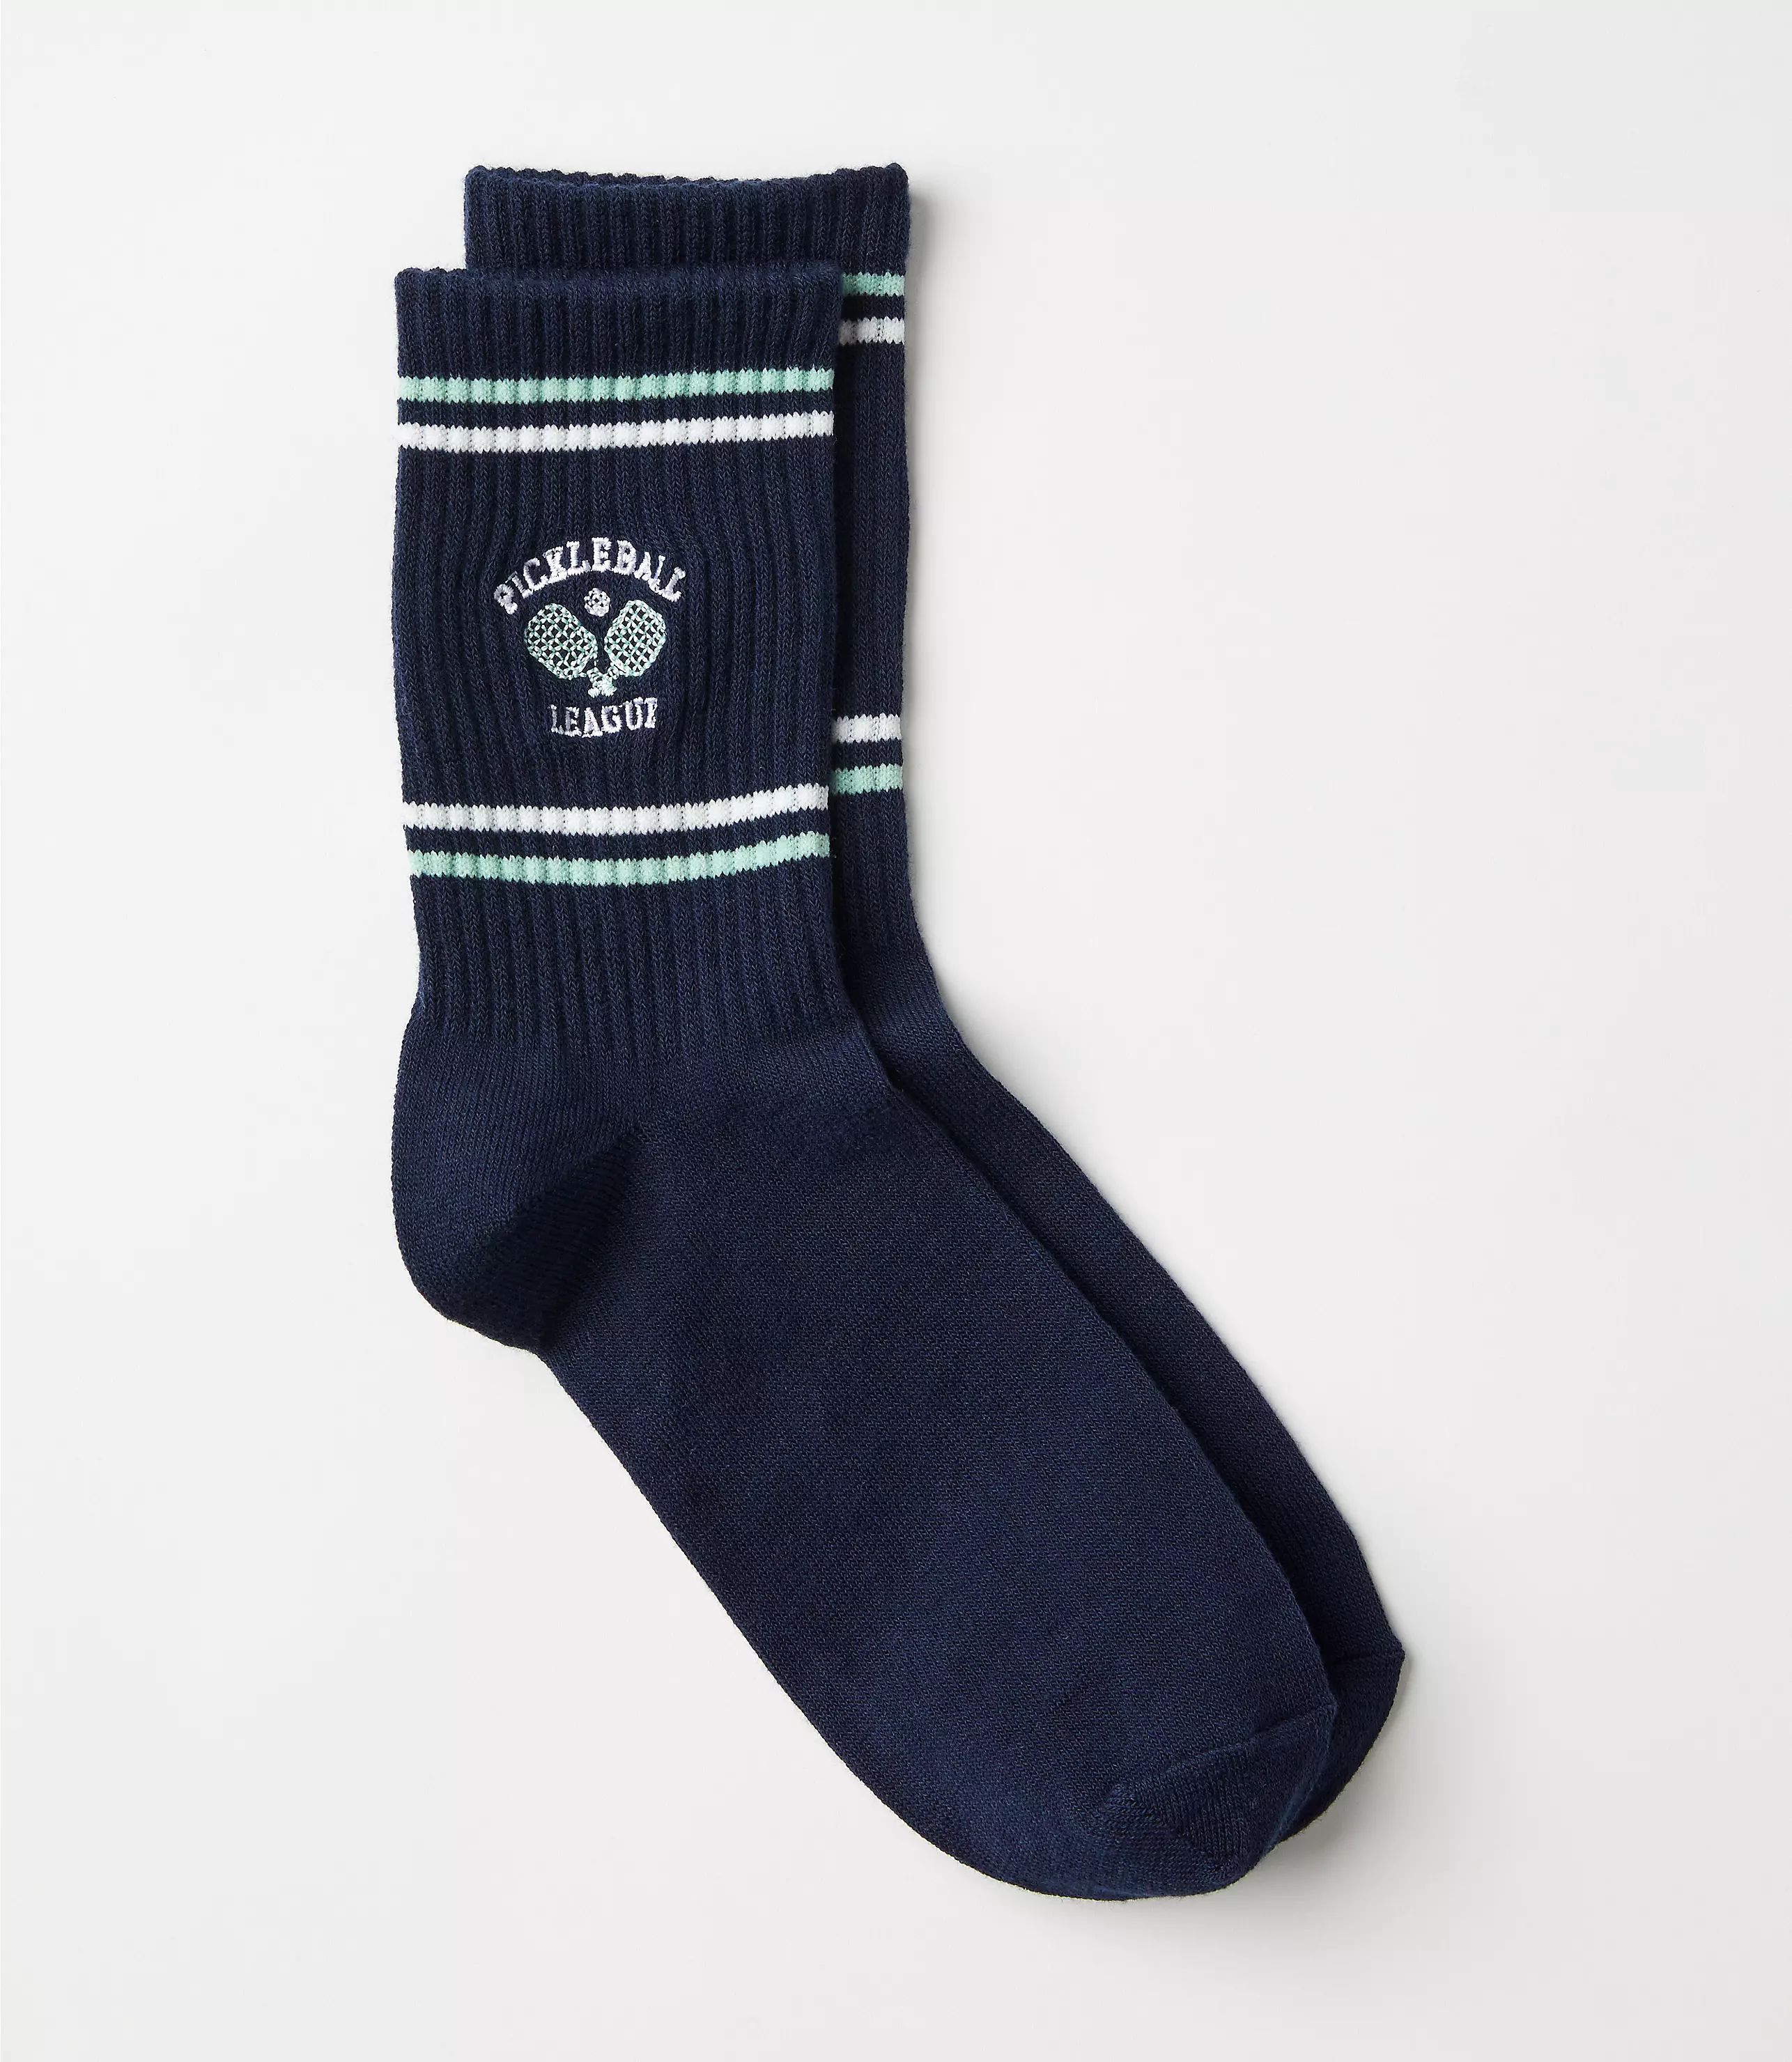 Lou & Grey Pickleball League Crew Socks | LOFT